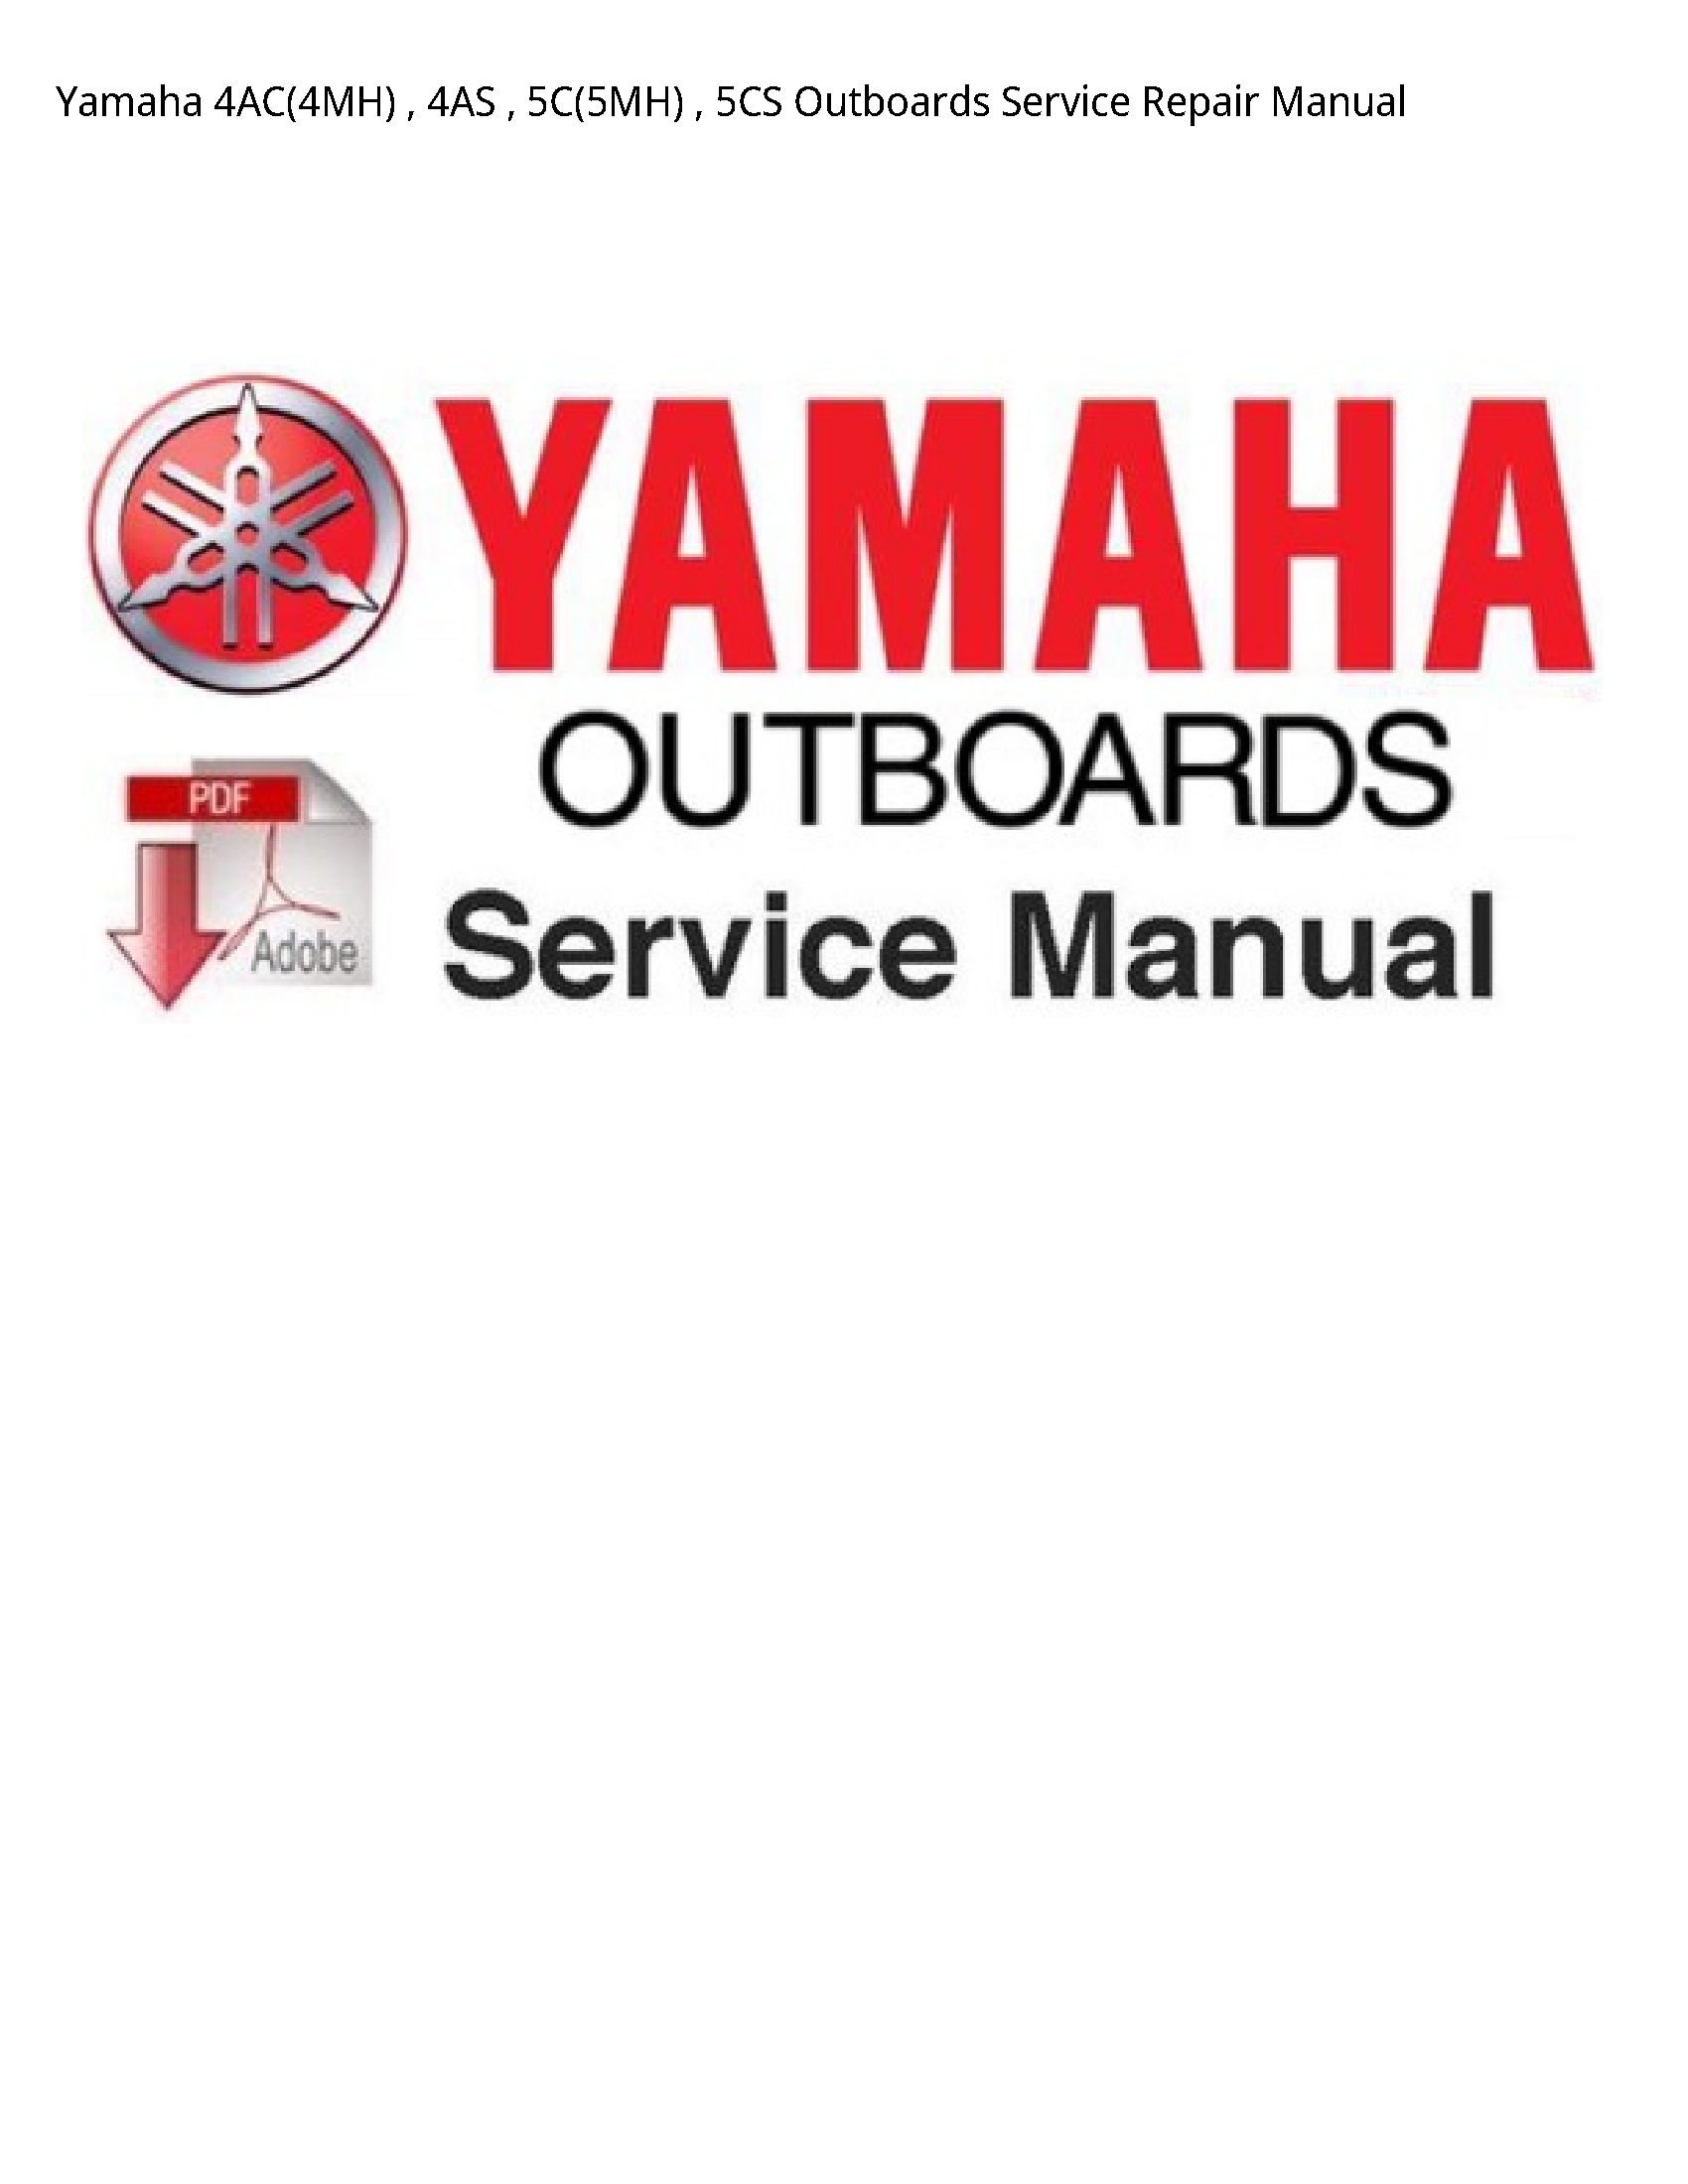 Yamaha 4AC(4MH) Outboards manual